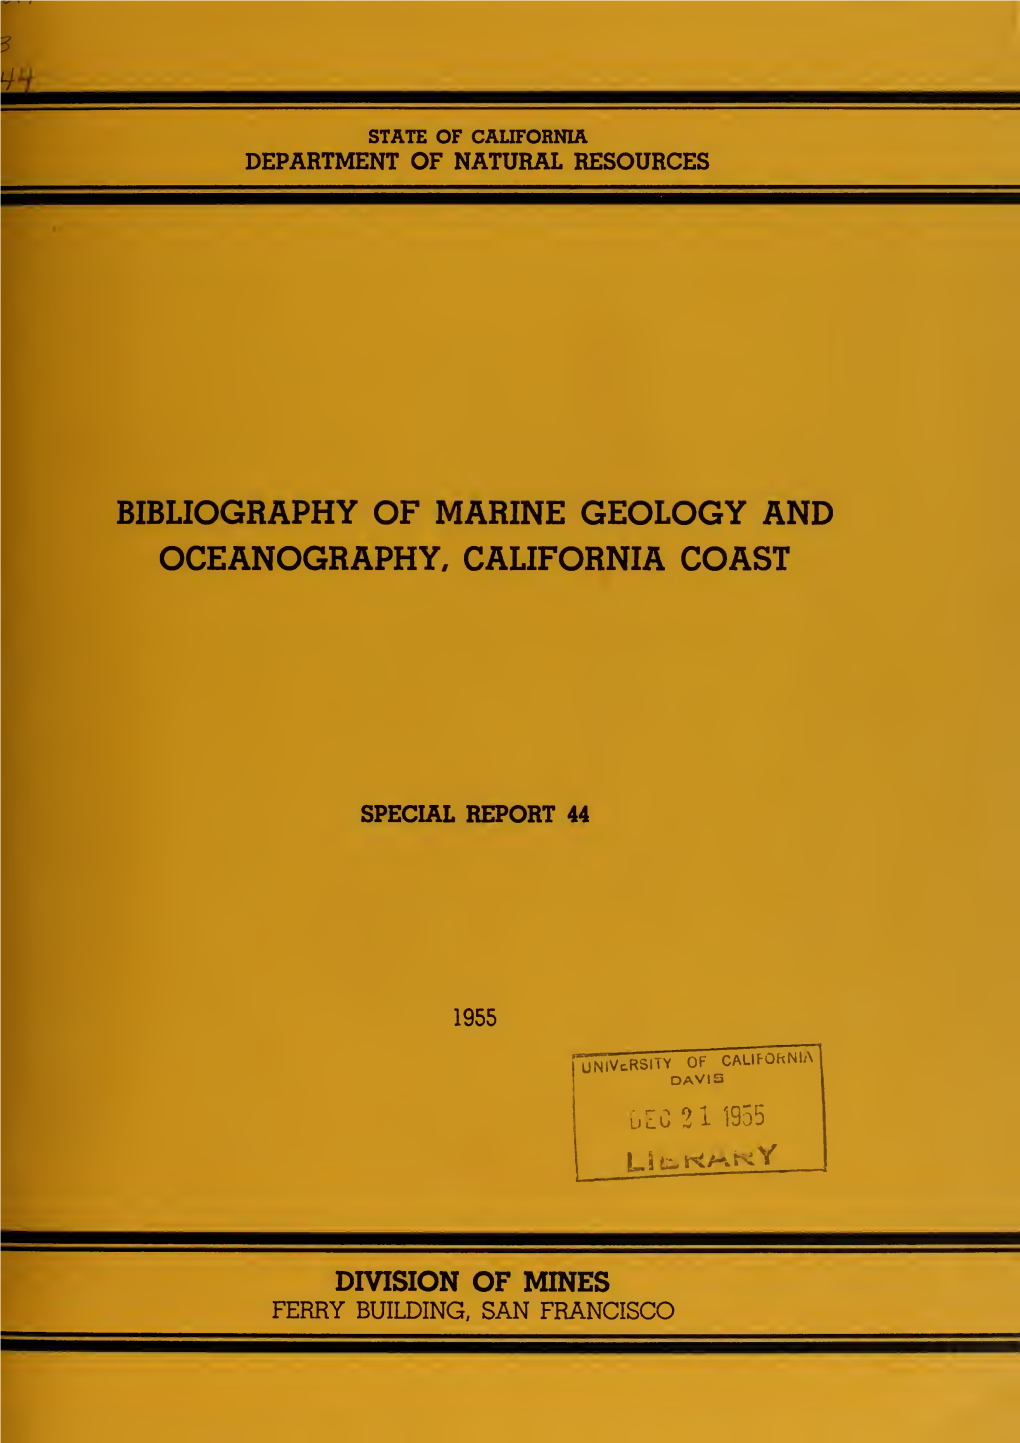 Bibliography of Marine Geology and Oceanography, California Coast